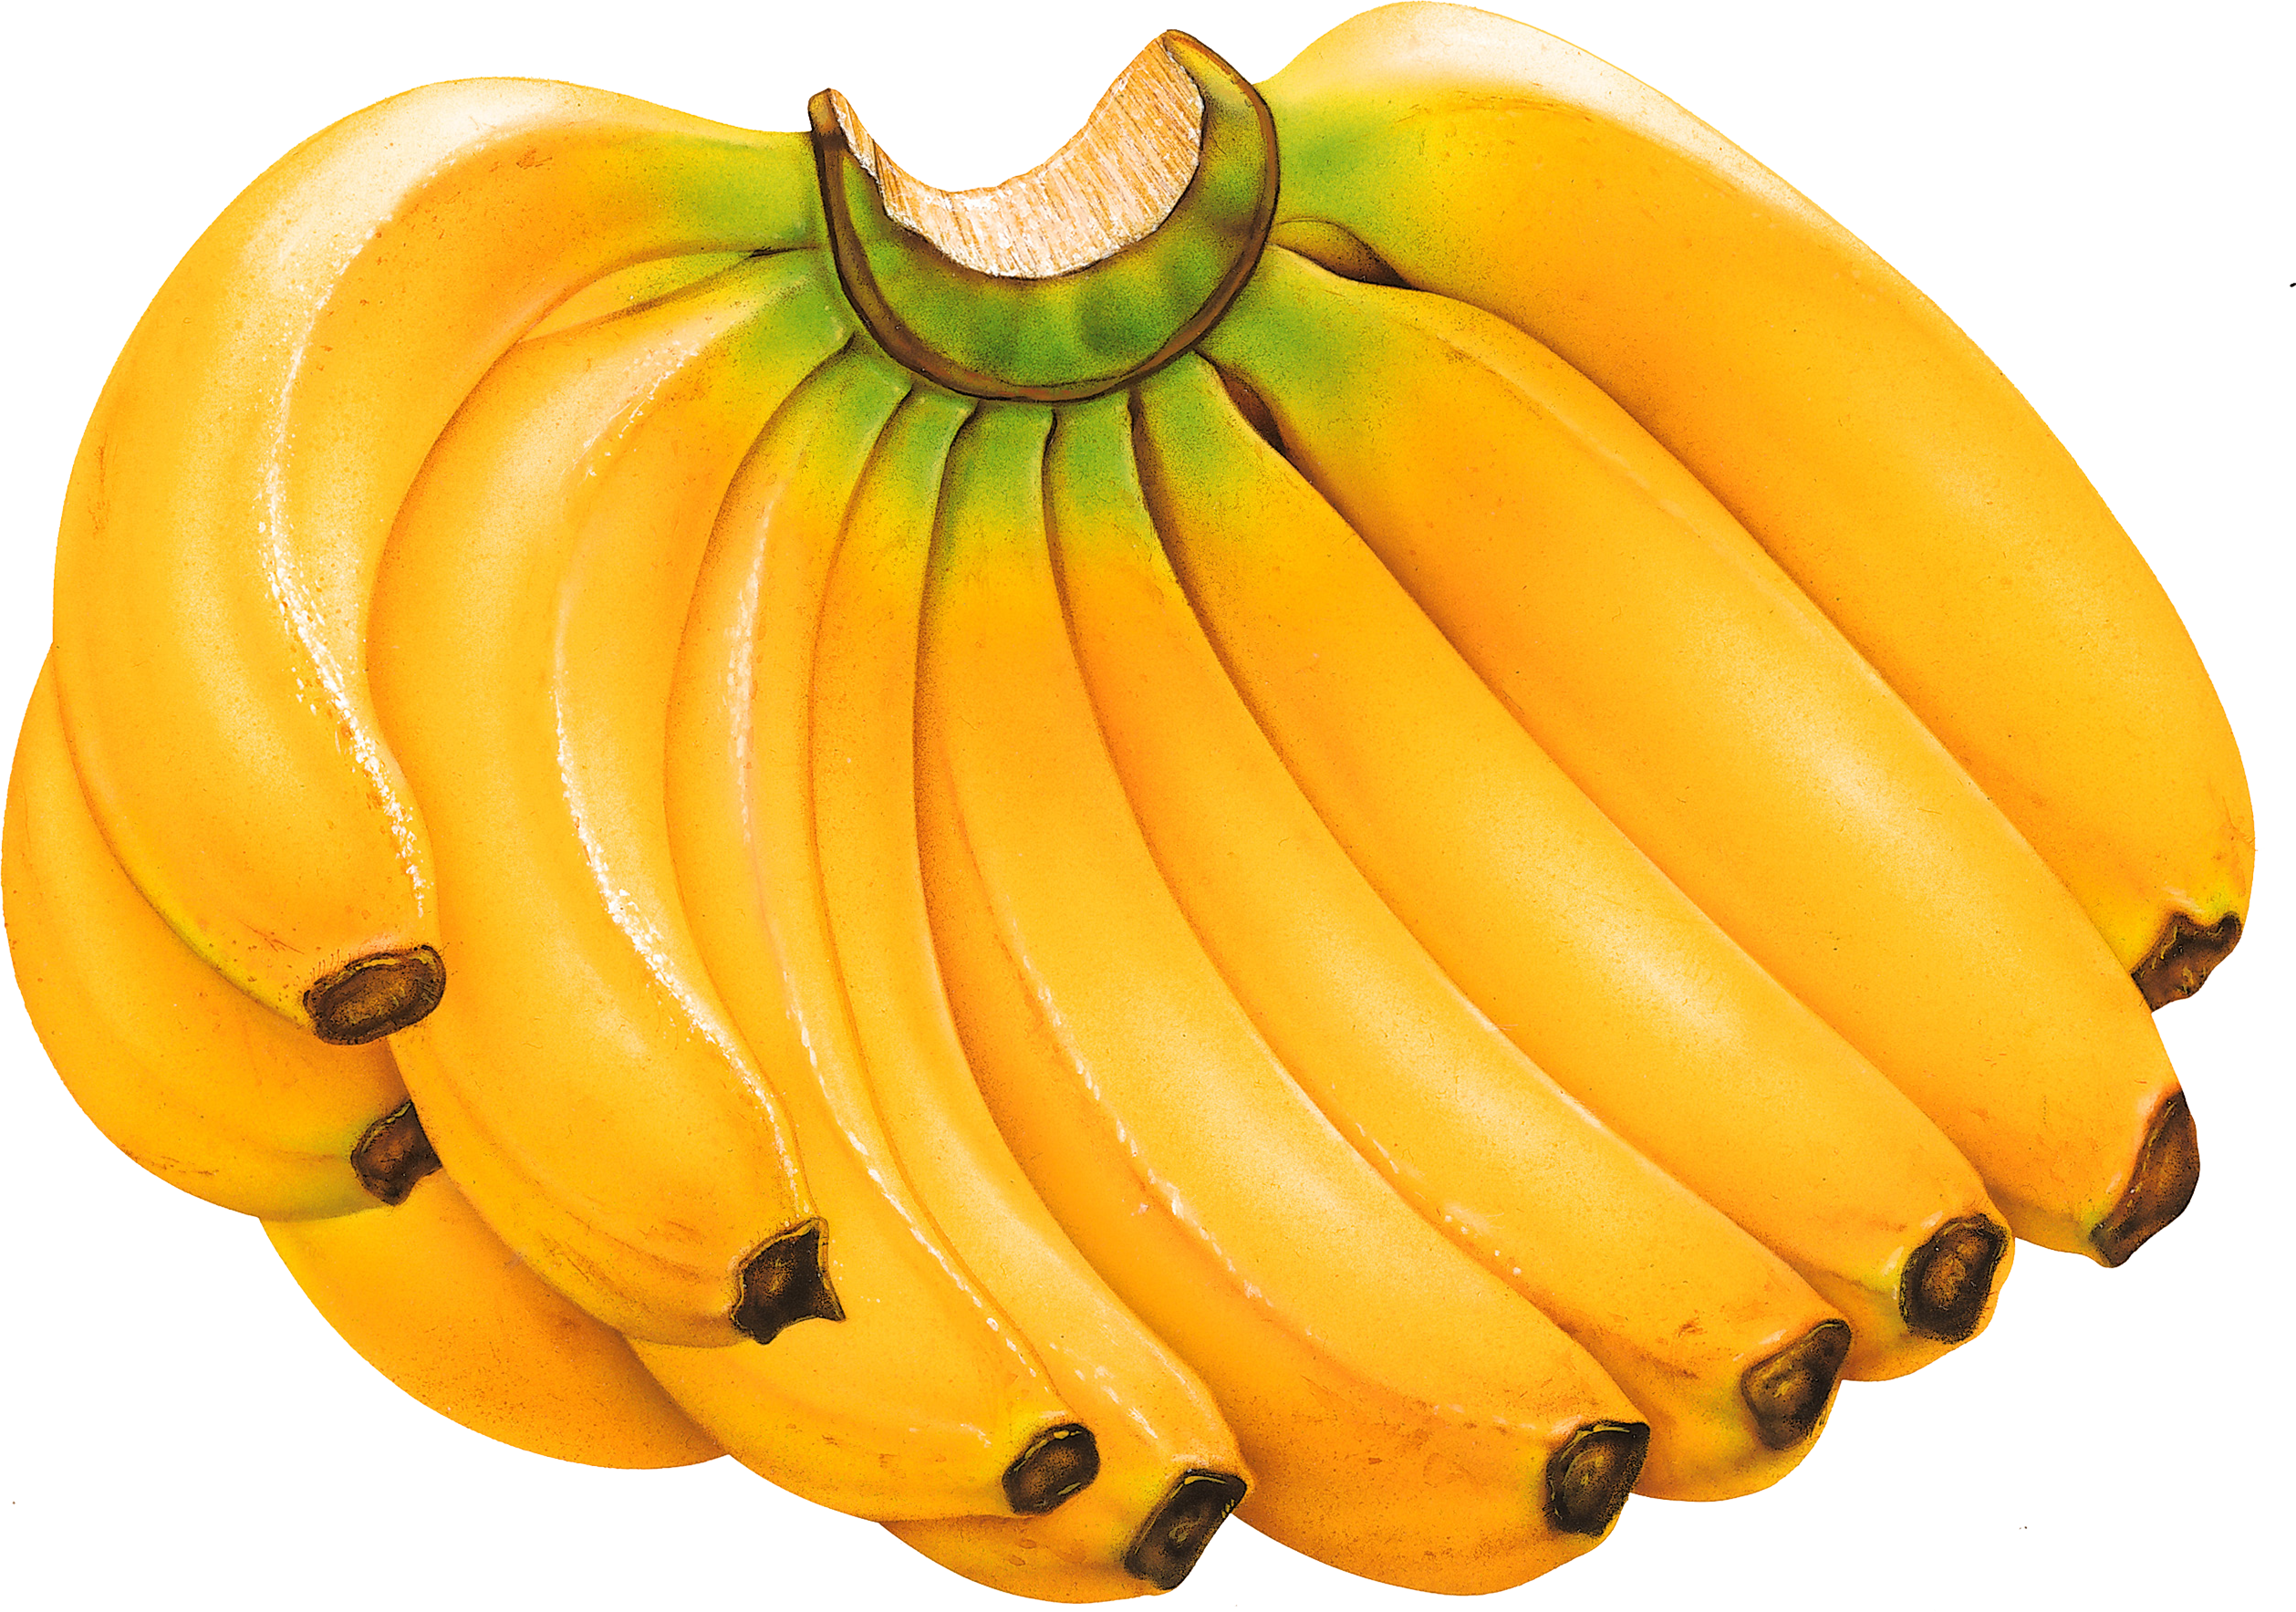 Viele Bananen